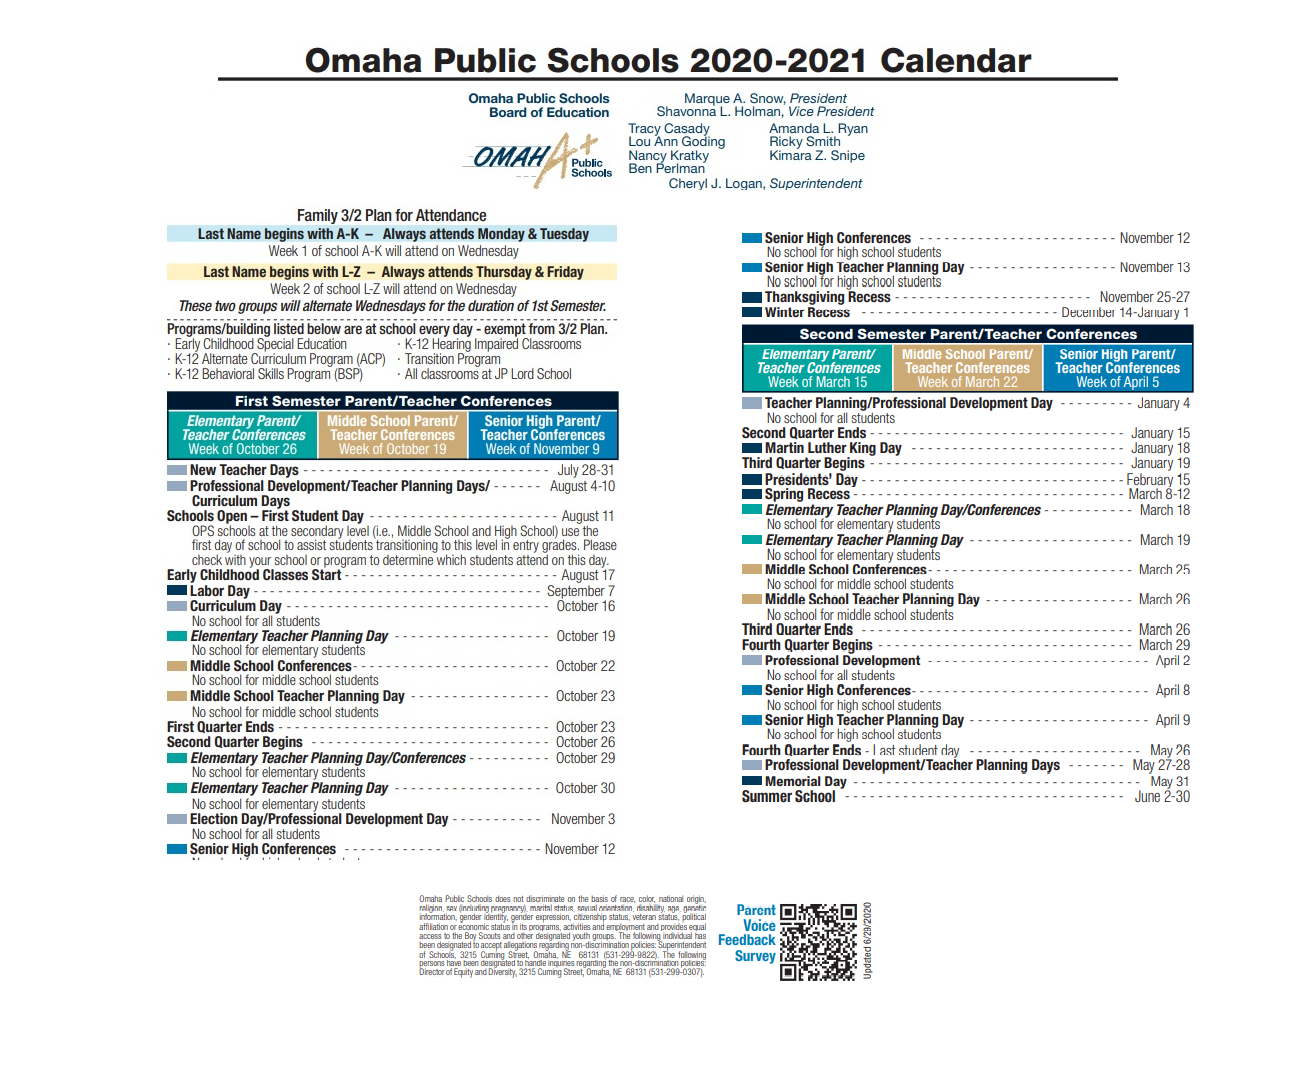 District School Academic Calendar Key for Kellom